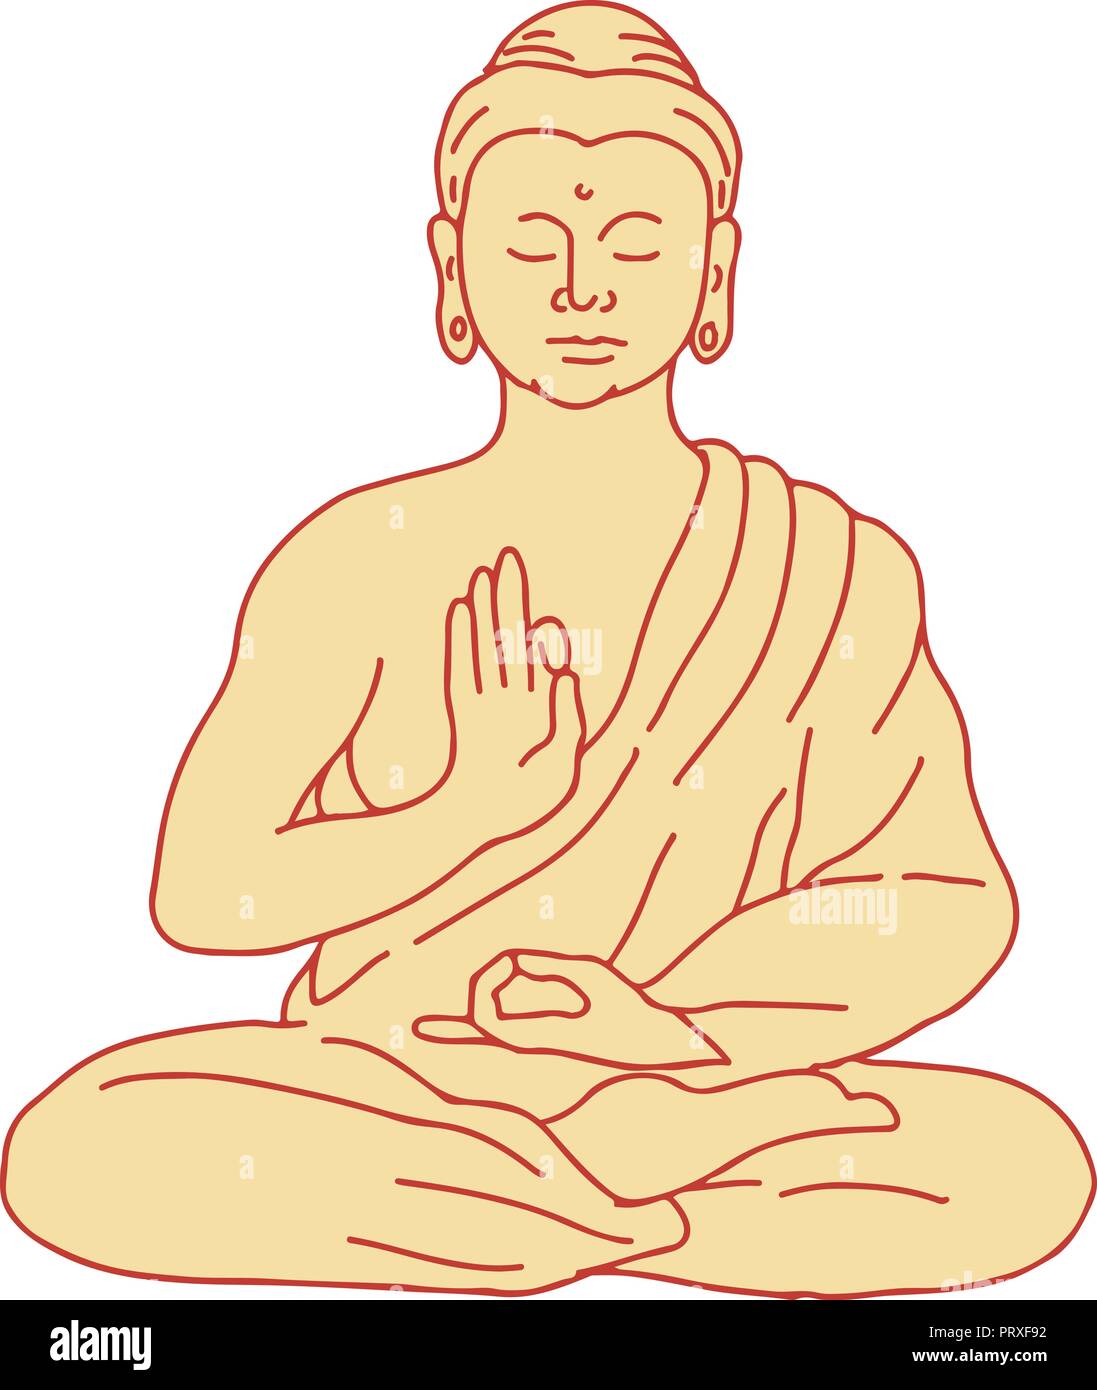 Drawing sketch style illustration of Gautama Buddha, Siddhartha Gautama or Shakyamuni Buddha sitting in lotus position viewed from front on isolated b Stock Vector